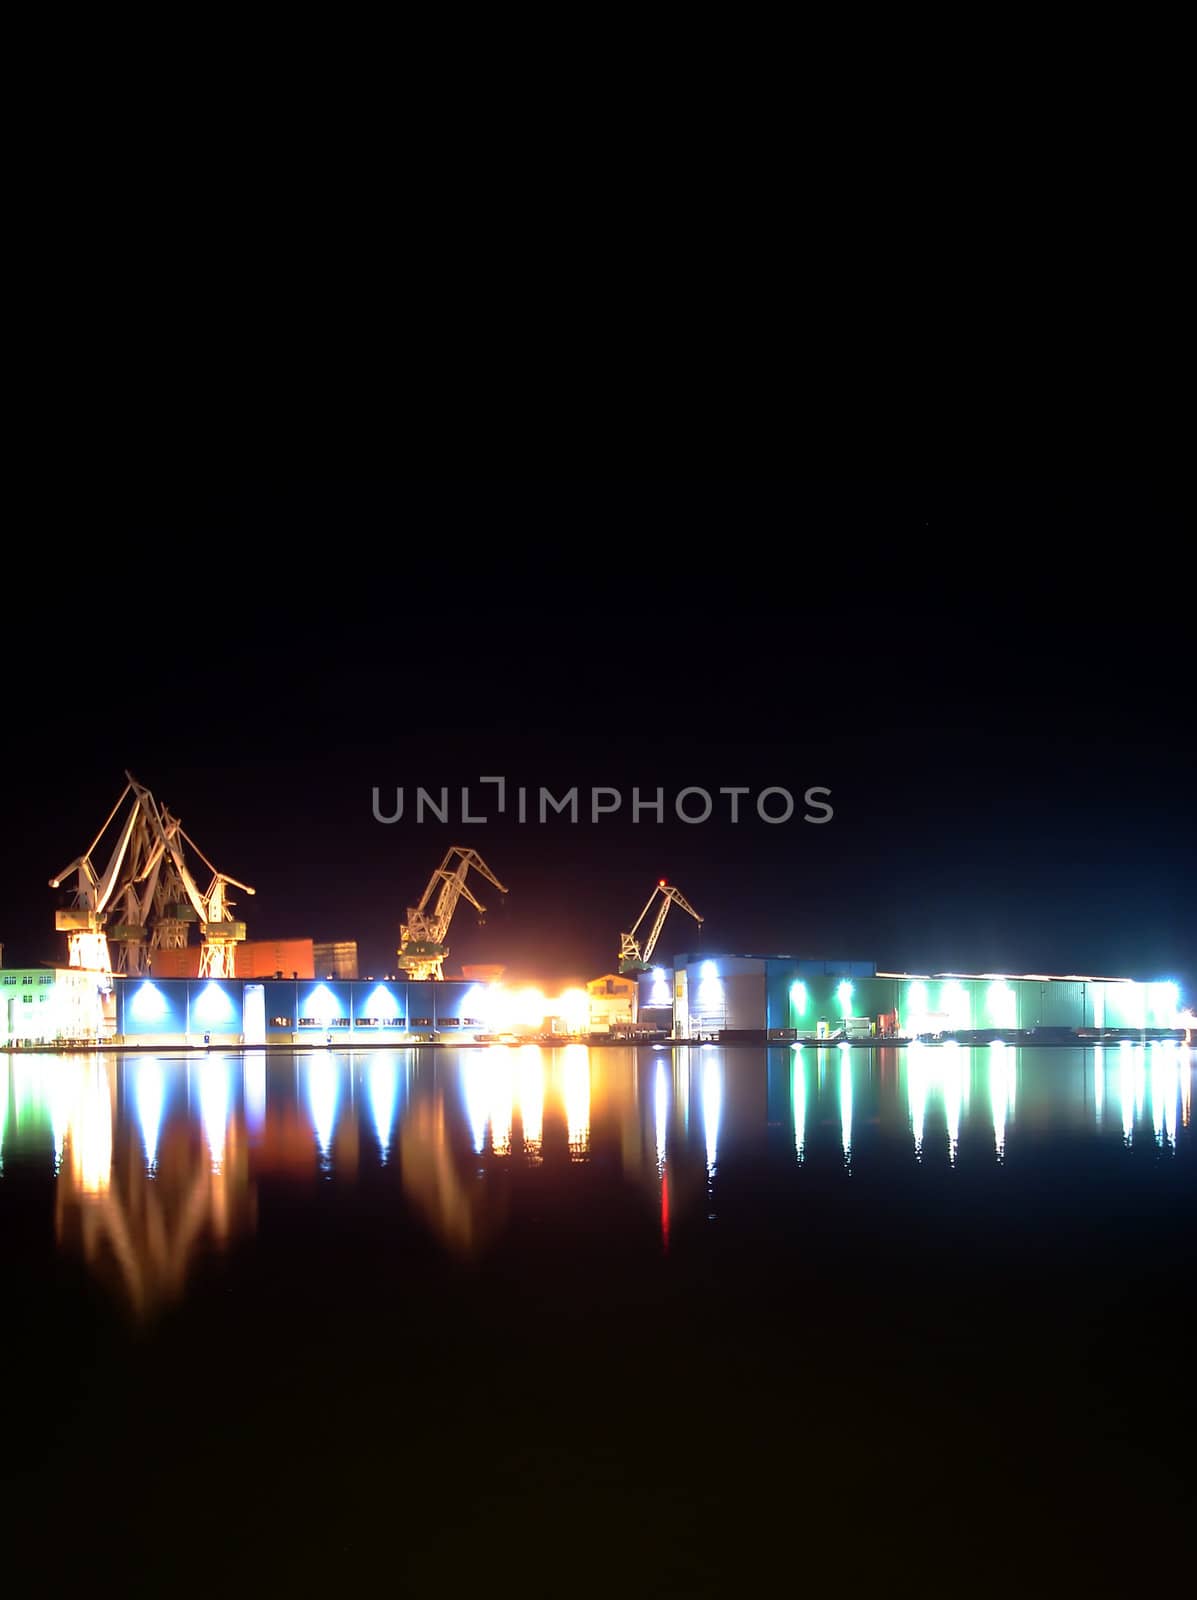 Night photo of a shipyard